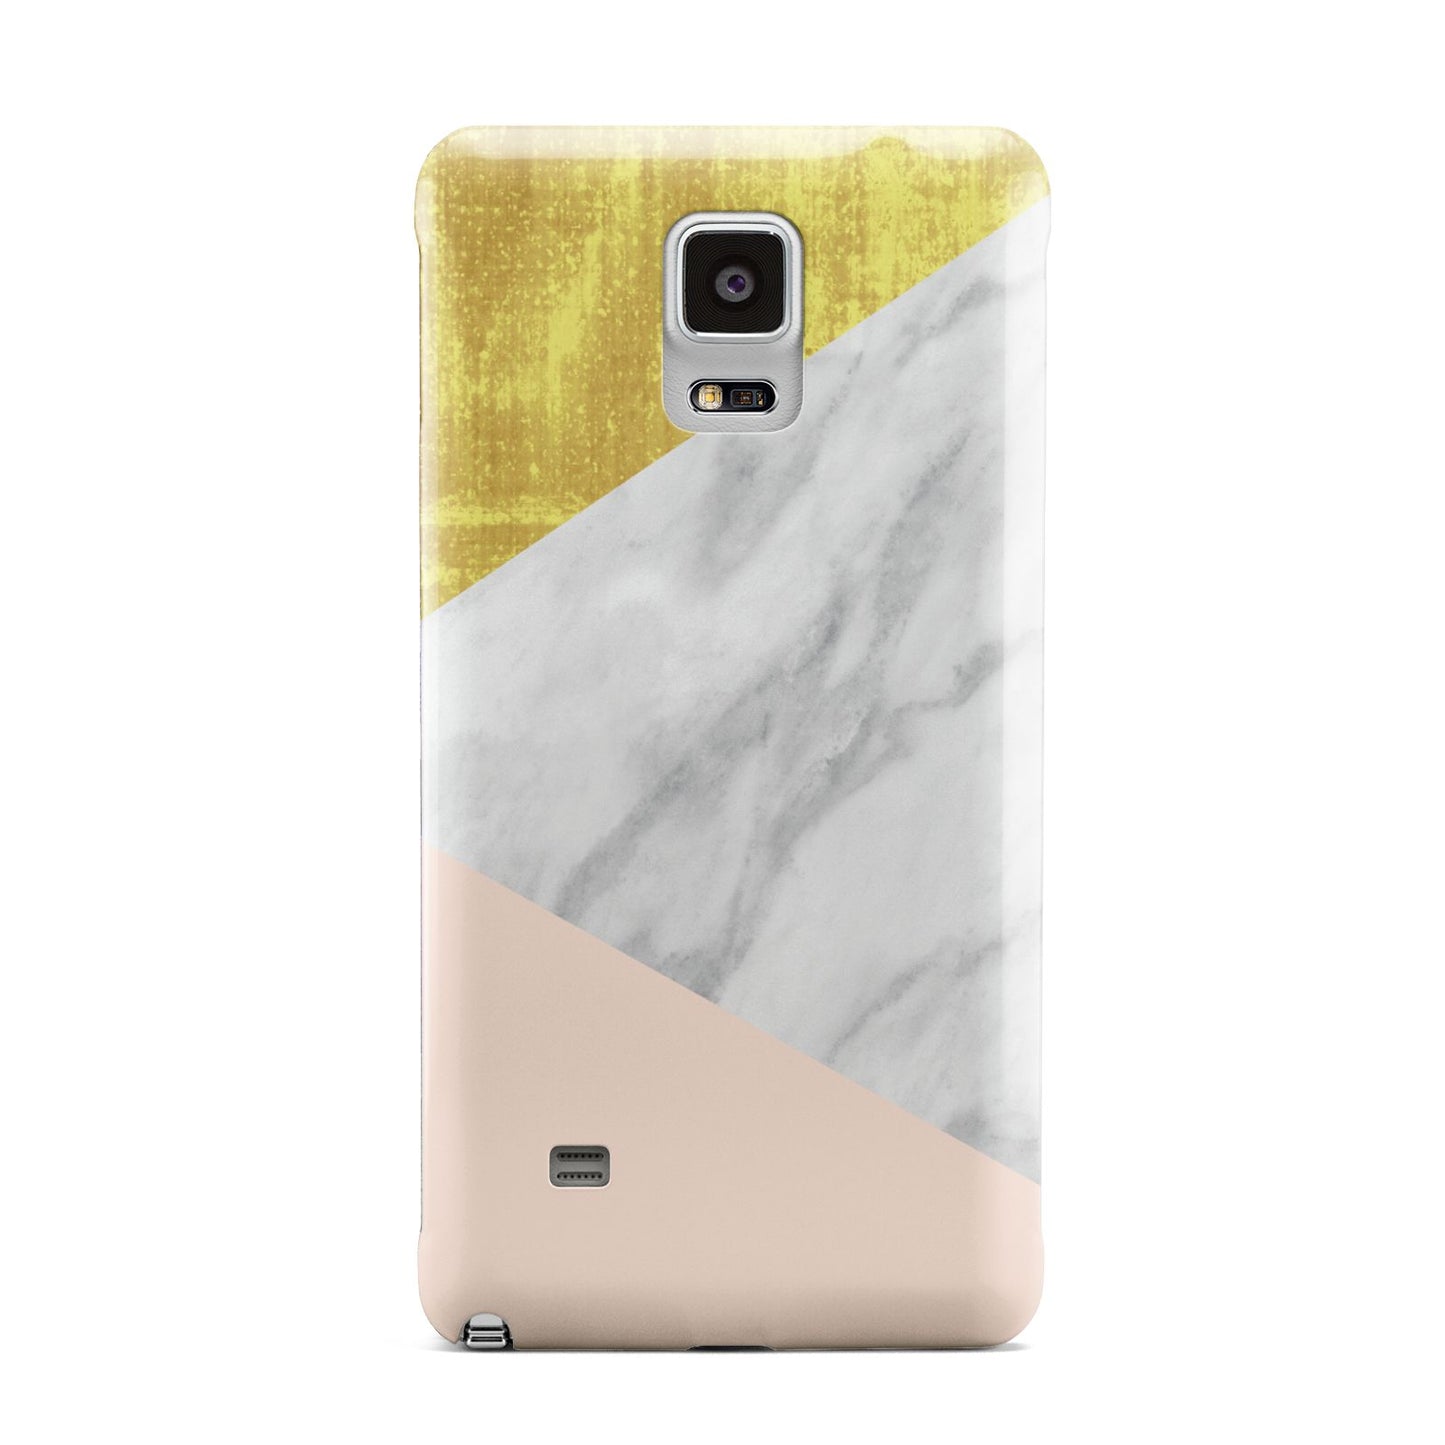 Marble White Gold Foil Peach Samsung Galaxy Note 4 Case